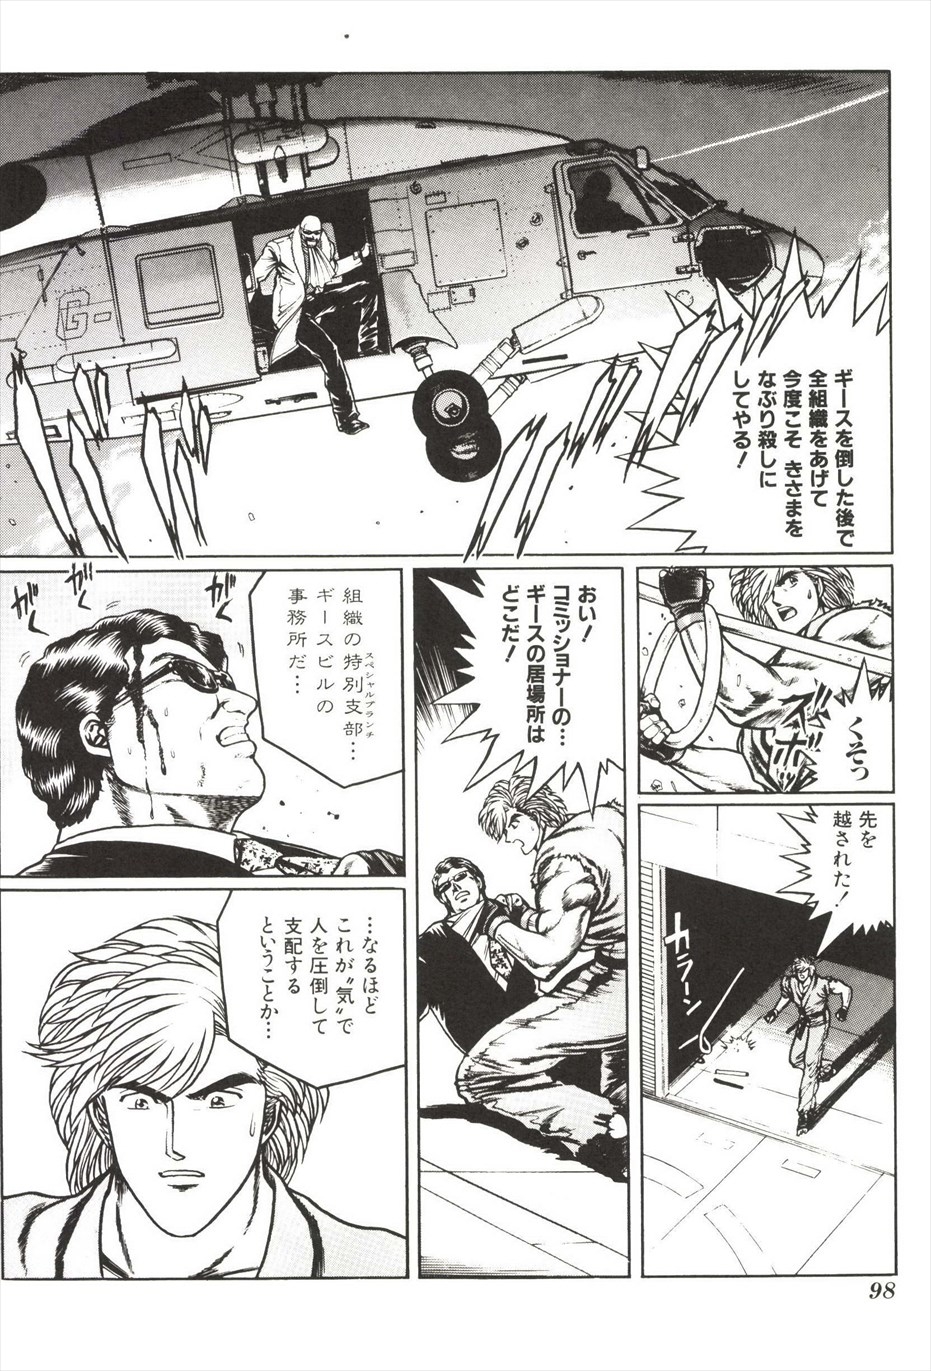 [amazishi etsuya] ART OF FIGHTING ryuuko no ken 2-2 99